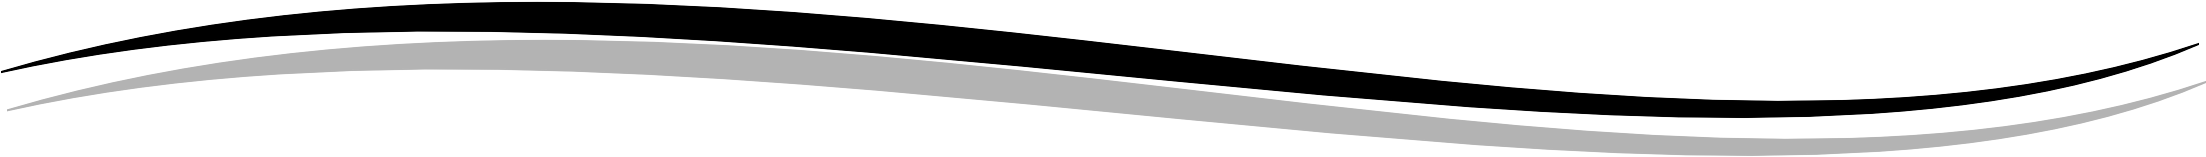 Horizontal Line Clipart Zg61u9 Clipart - Monochrome (2206x211)